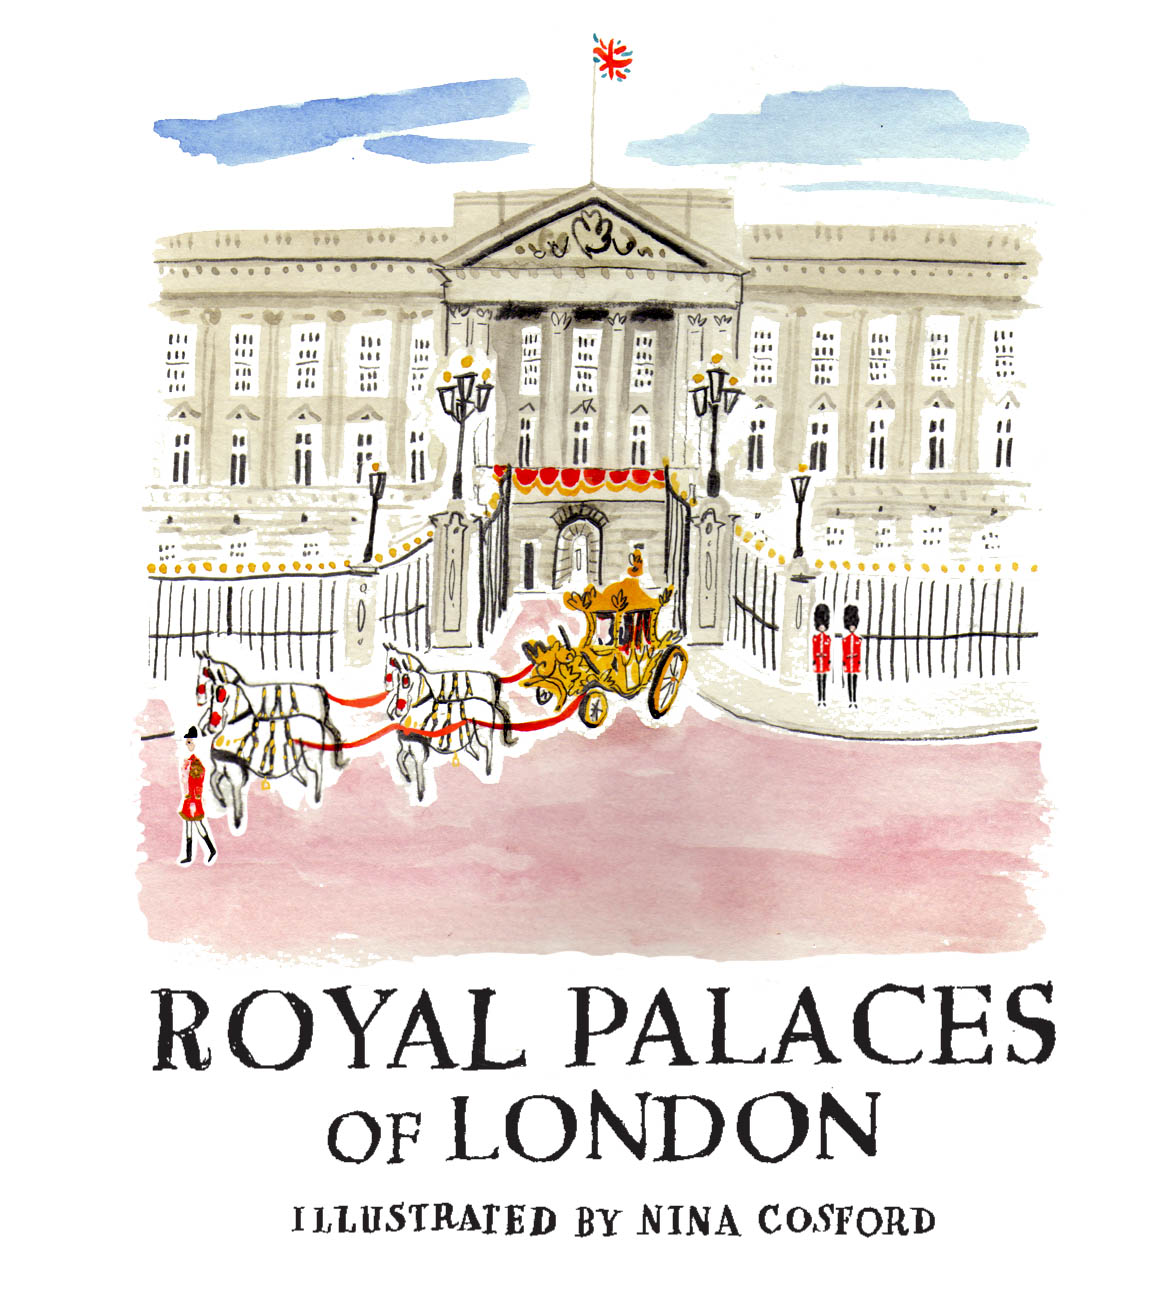 Nina Cosford Illustration - walker books royal palaces of London